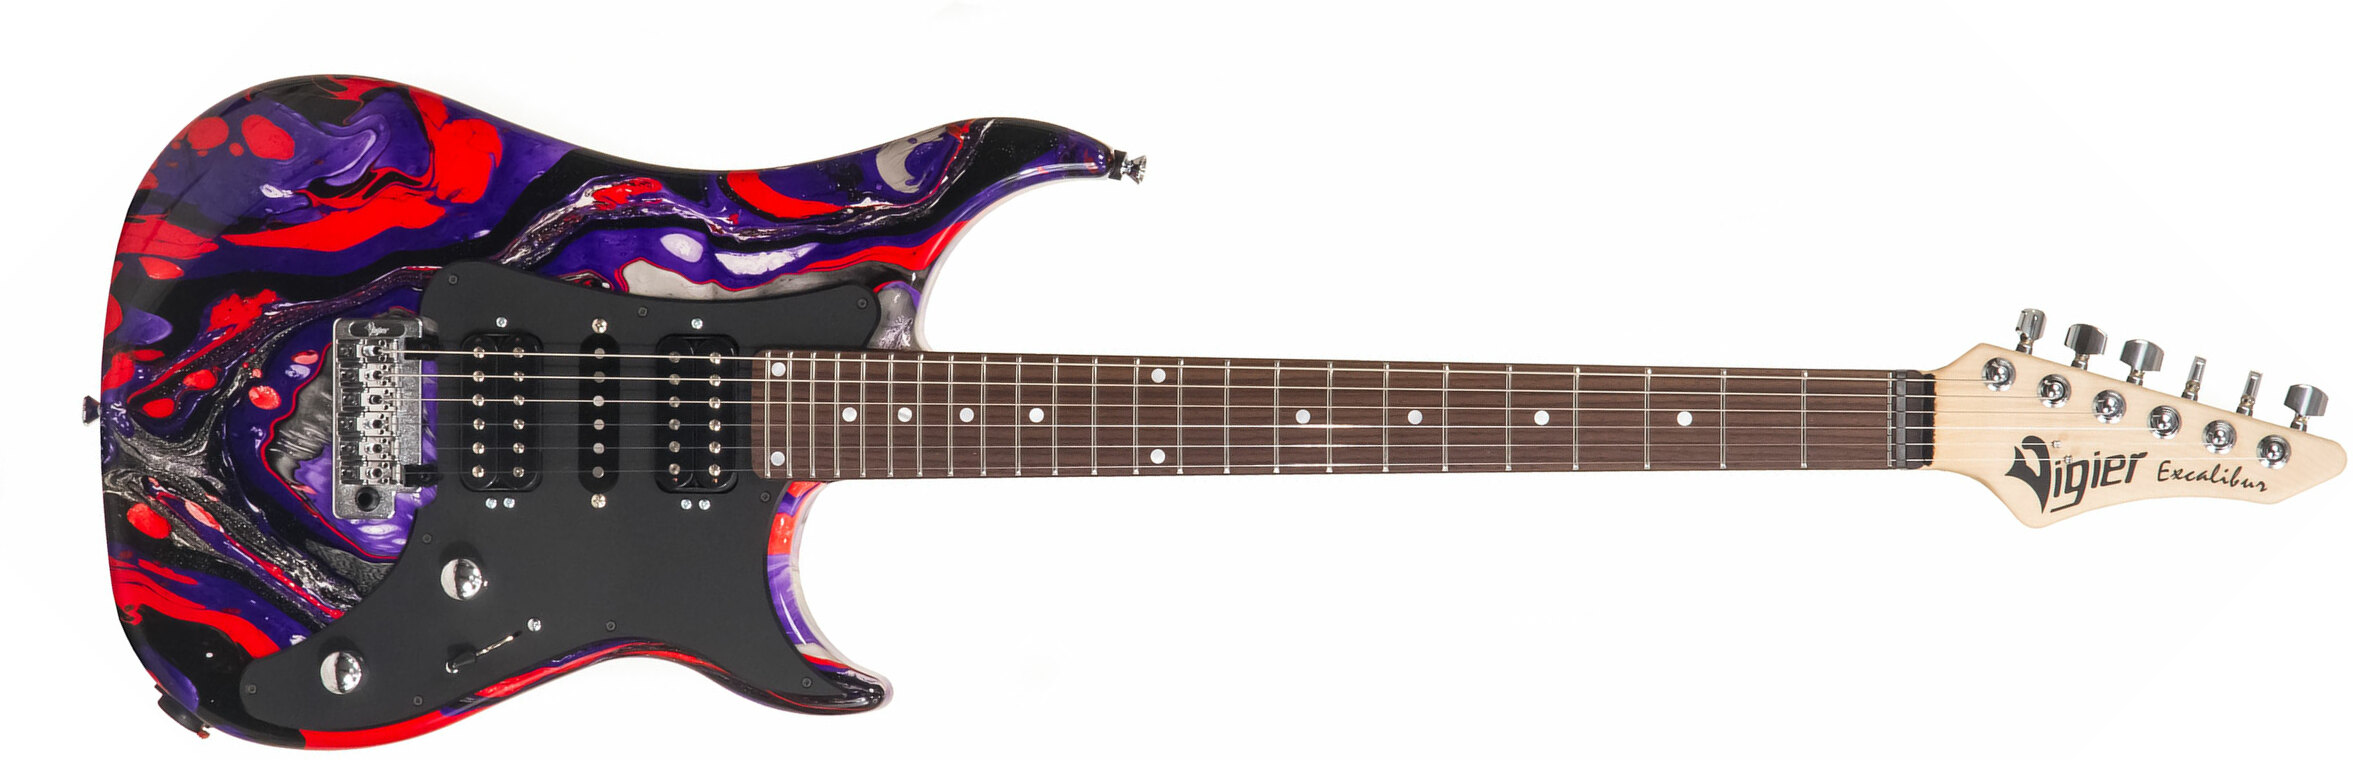 Vigier Excalibur Supraa Hsh Trem Rw - Rock Art Purple Red Black - Guitarra eléctrica con forma de str. - Main picture